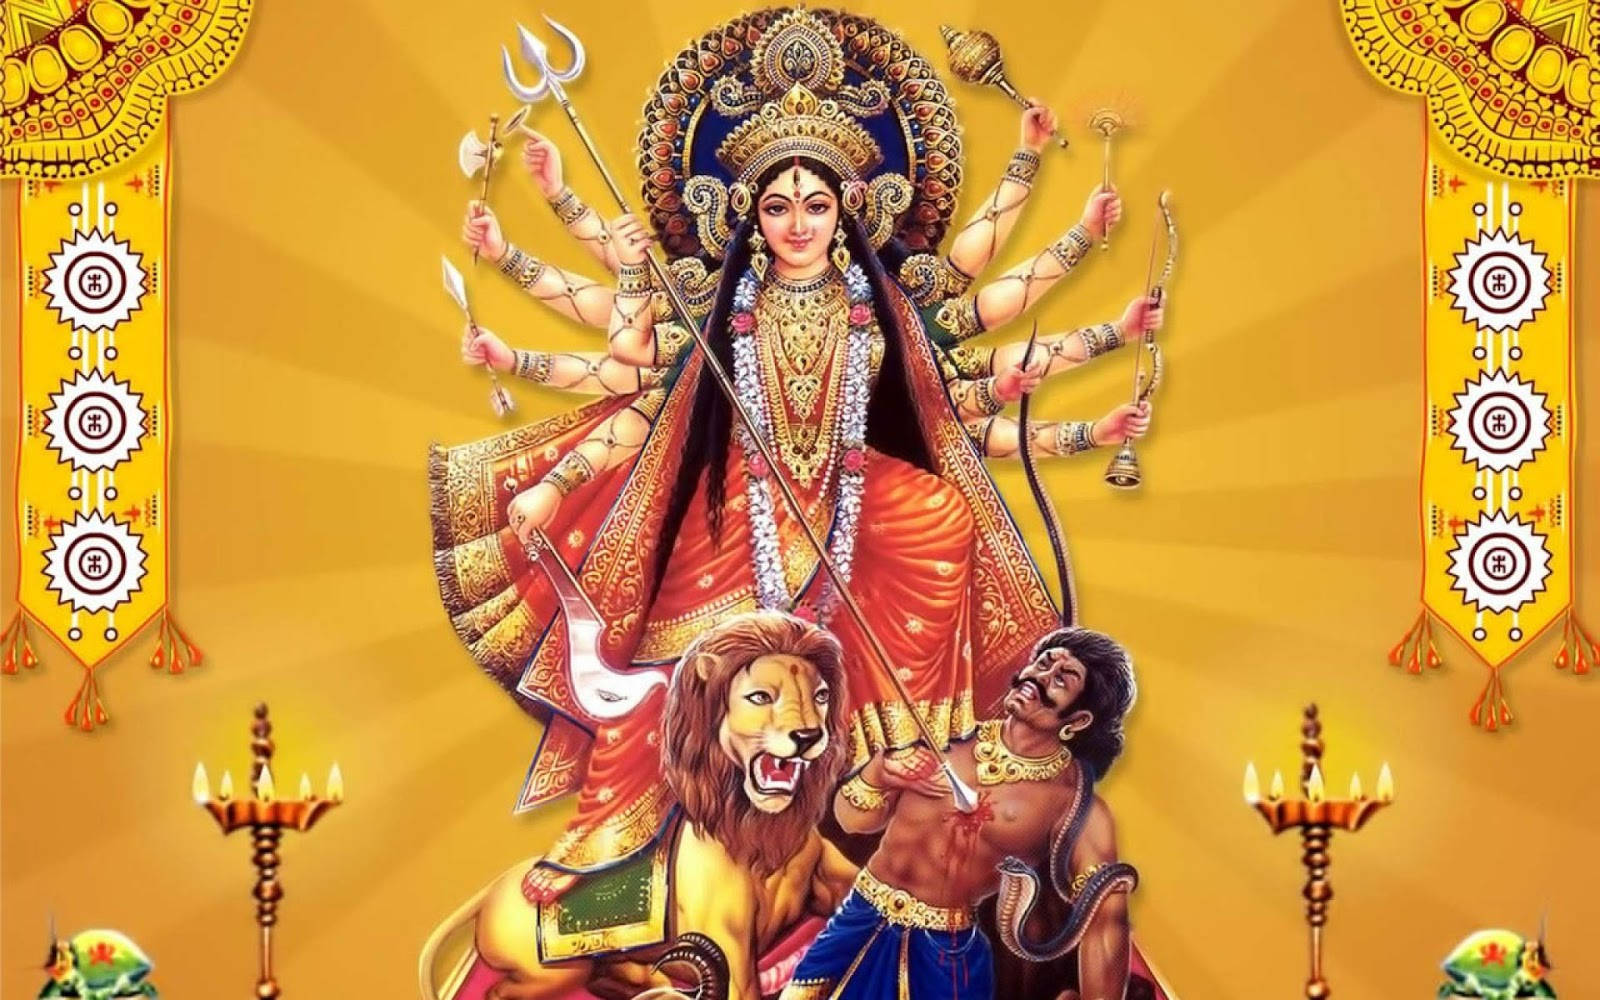 Dietötung Von Mahishasura Durch Durga Devi Wallpaper